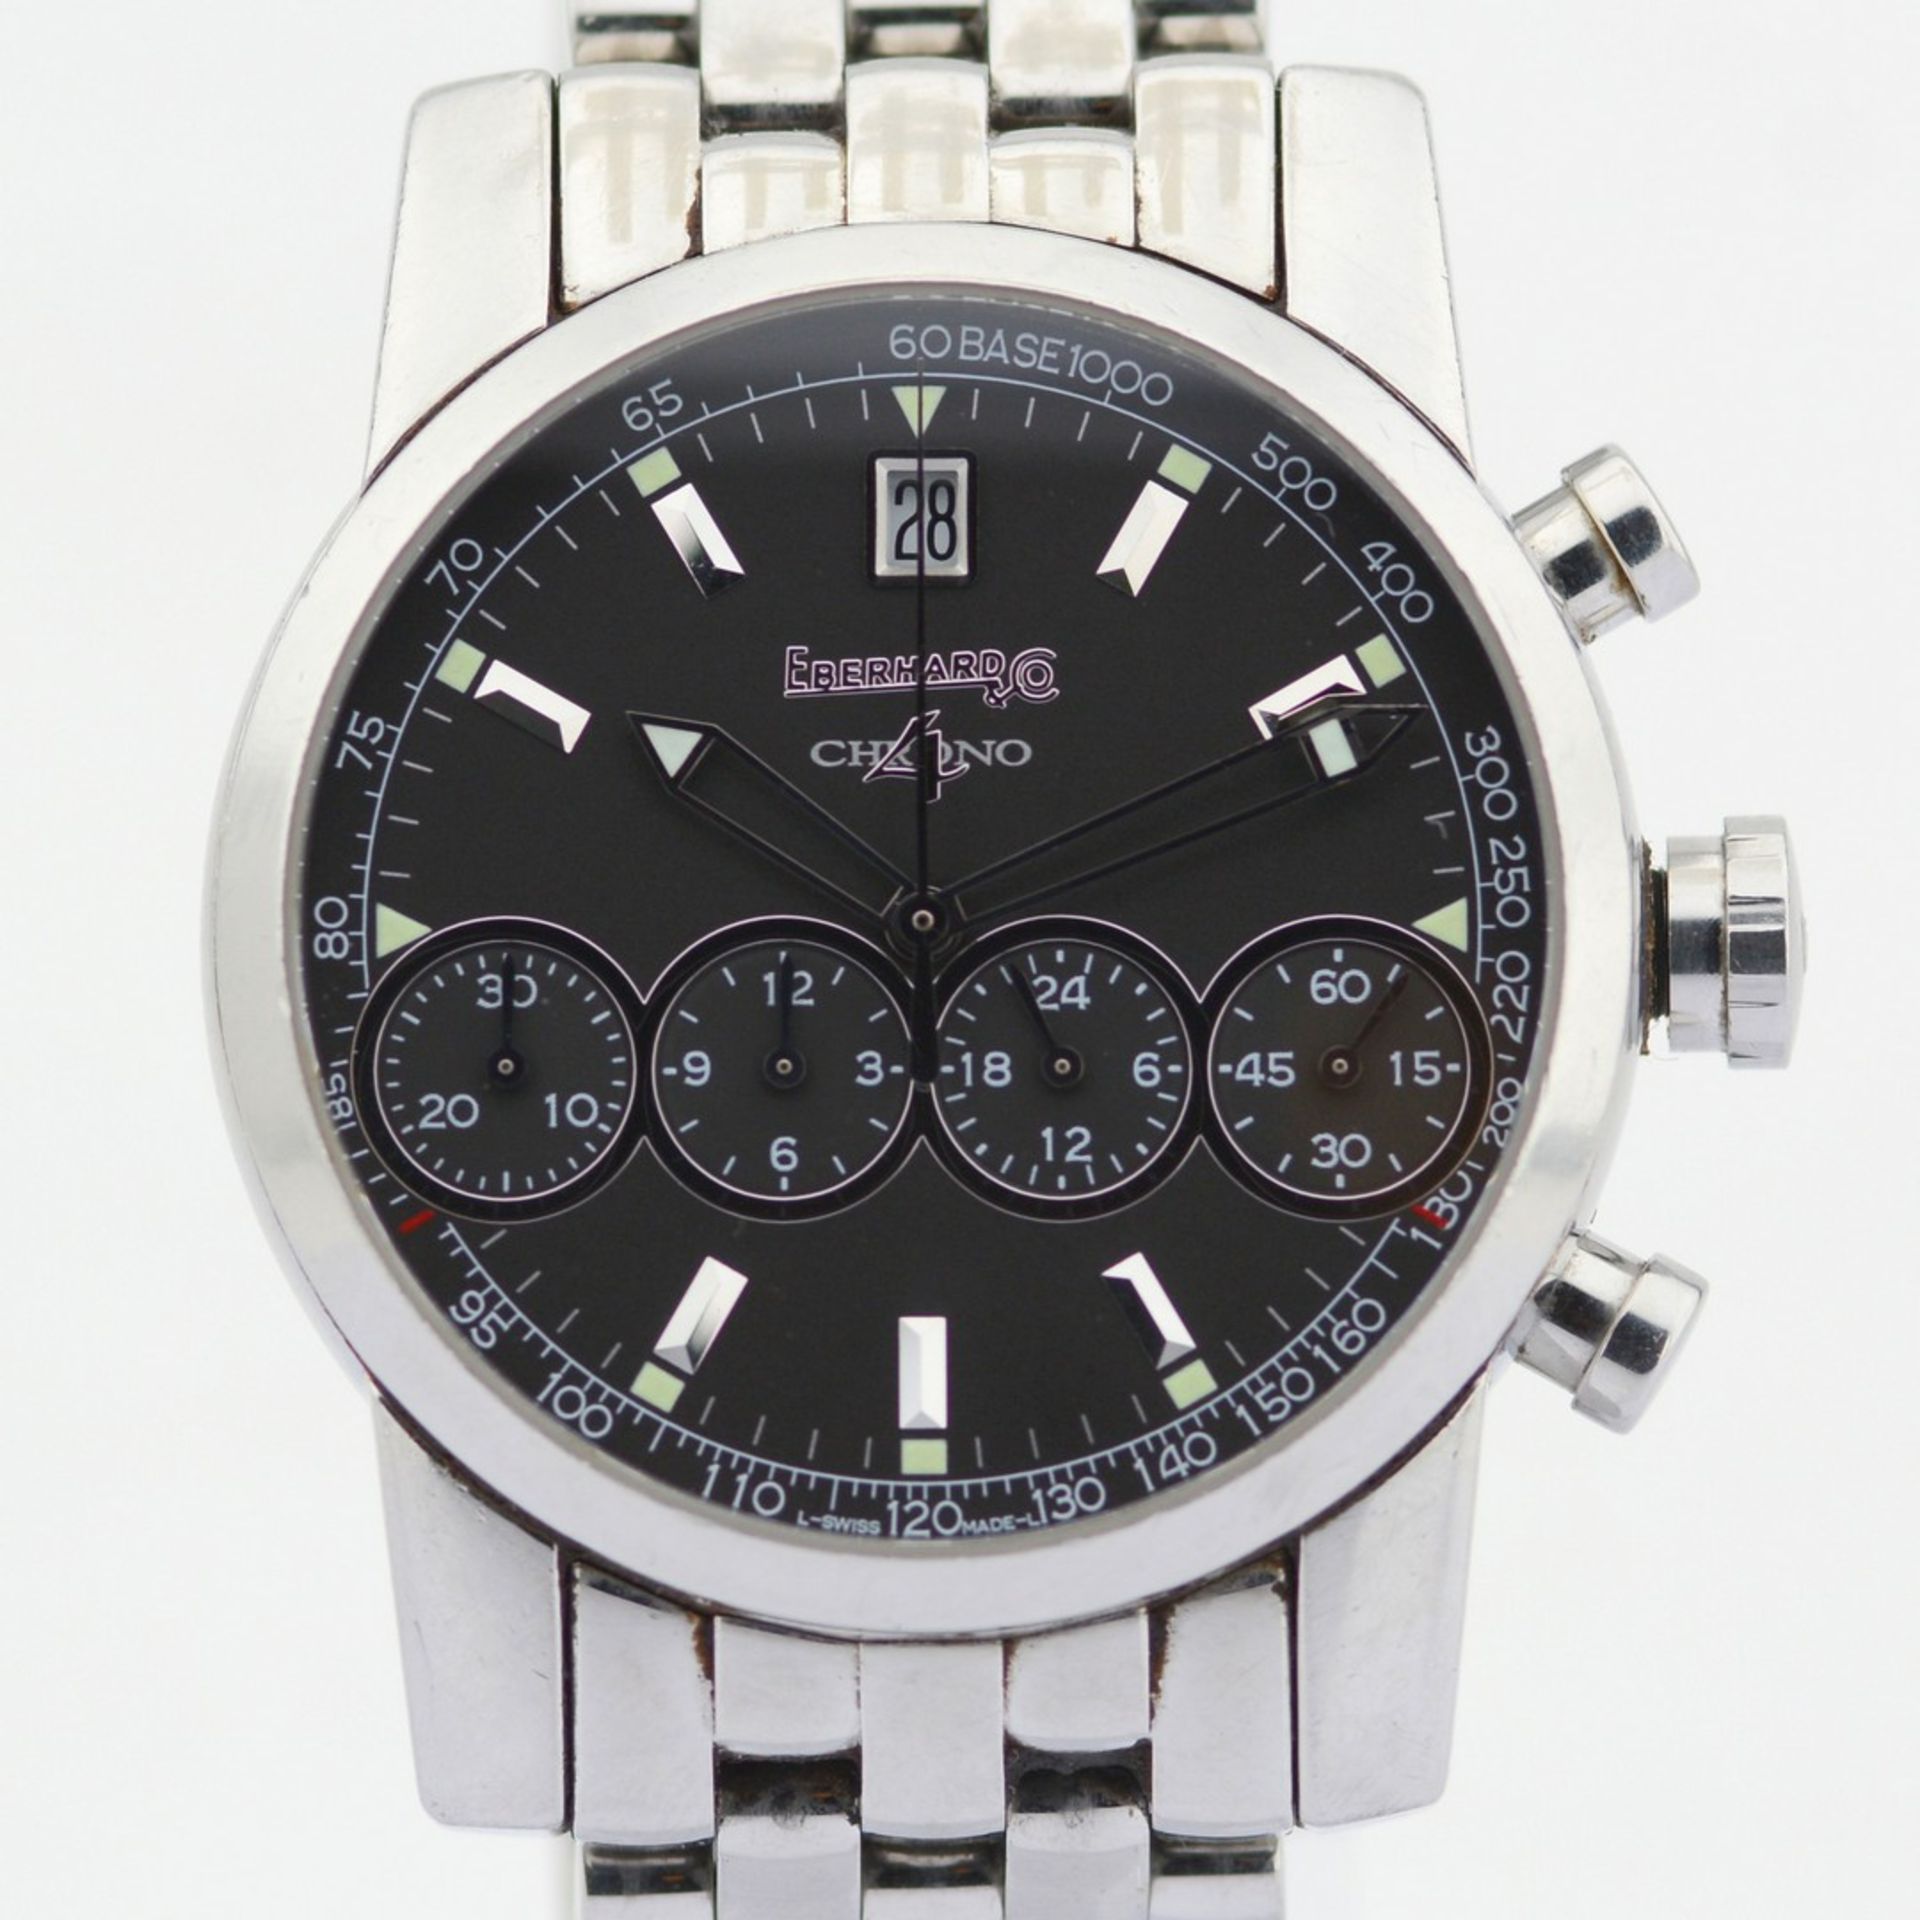 Eberhard & Co. / Chrono 4 Chronograph Automatic -Date - Gentlmen's Steel Wrist Watch